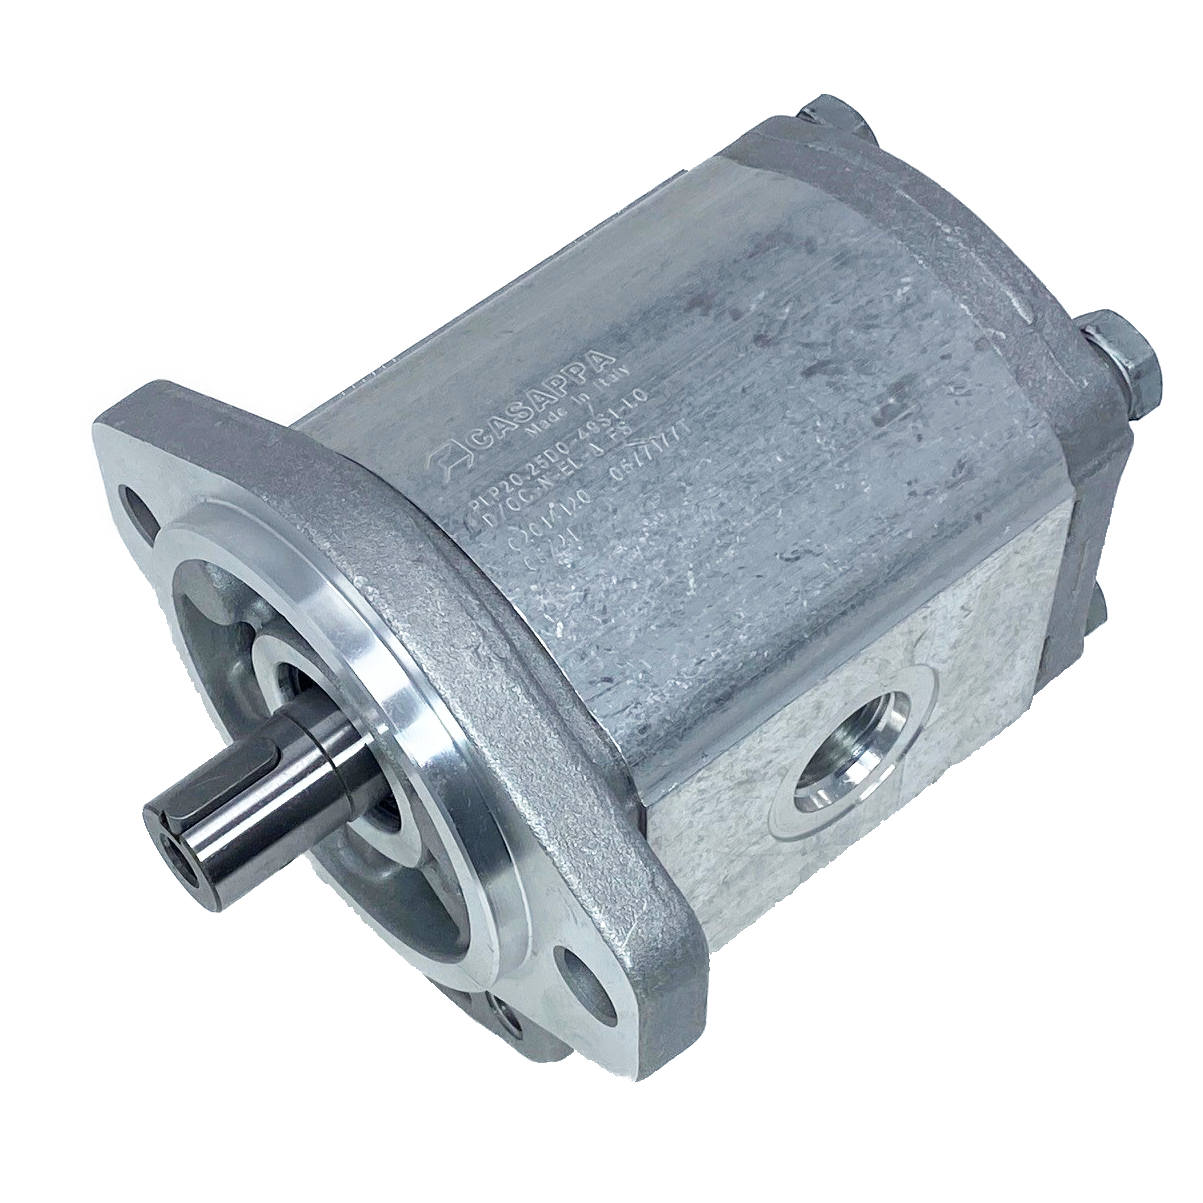 PLM20.25B0-50S1-LOC/OD-N-EL : Casappa Polaris Gear Motor, 26.42cc, 2465psi Rated, 3045RPM, Reversible Interior Drain, 3/4" Bore x 3/16" Key Shaft, SAE A 2-Bolt Flange, 0.625 (5/8") #10 SAE Inlet, 0.75 (3/4") #12 SAE Outlet, Aluminum Body & Flange